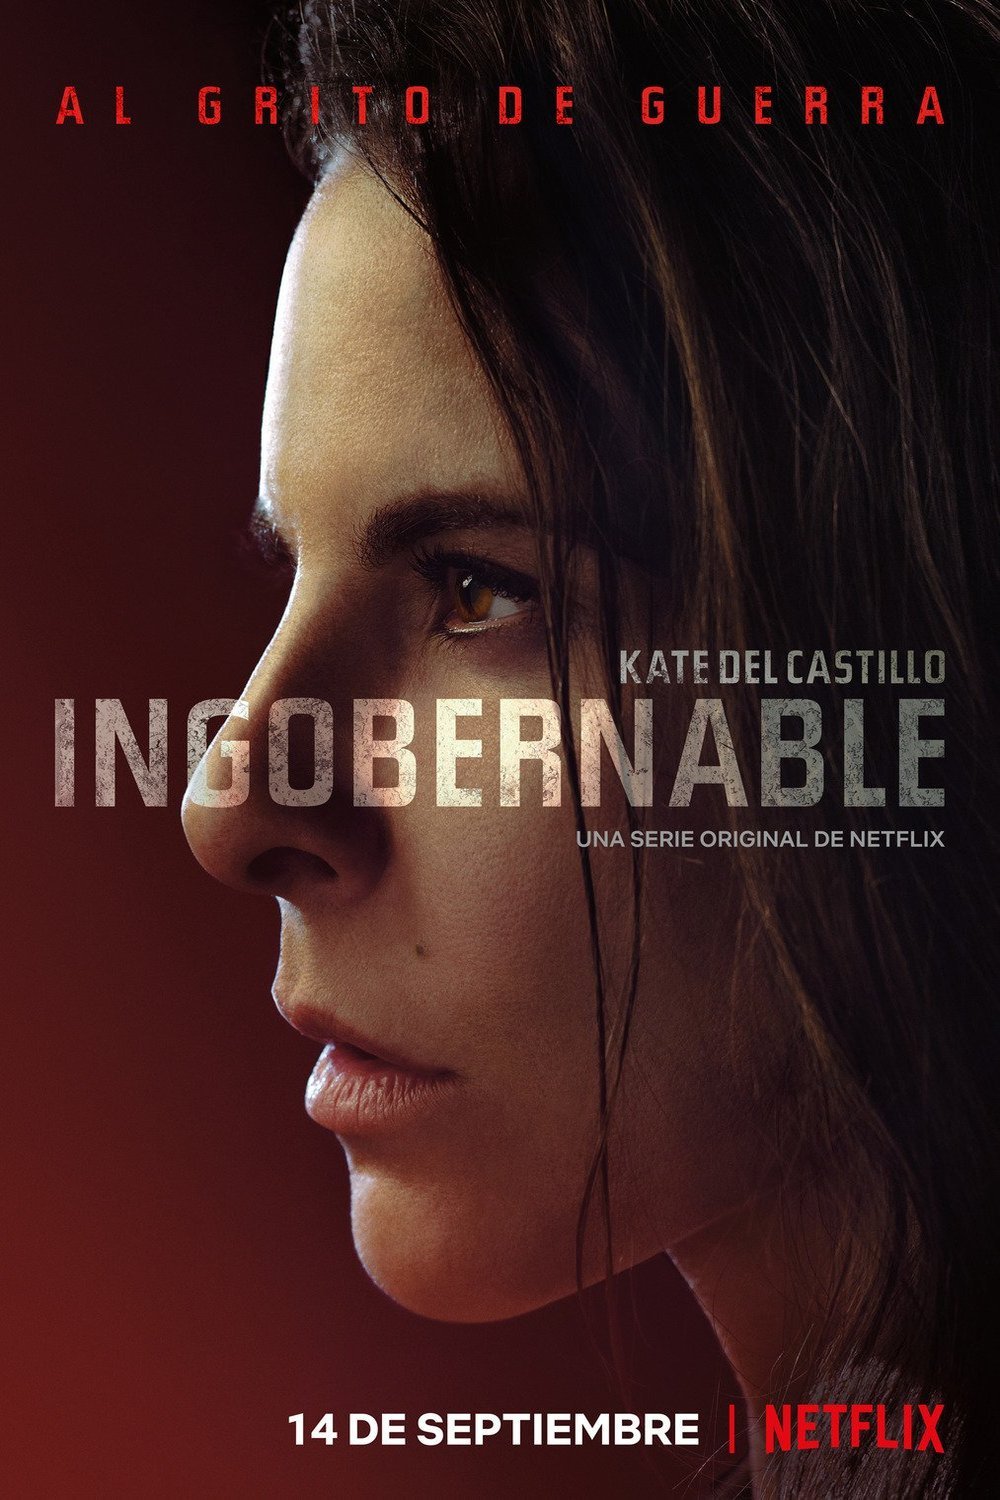 Spanish poster of the movie Ingobernable